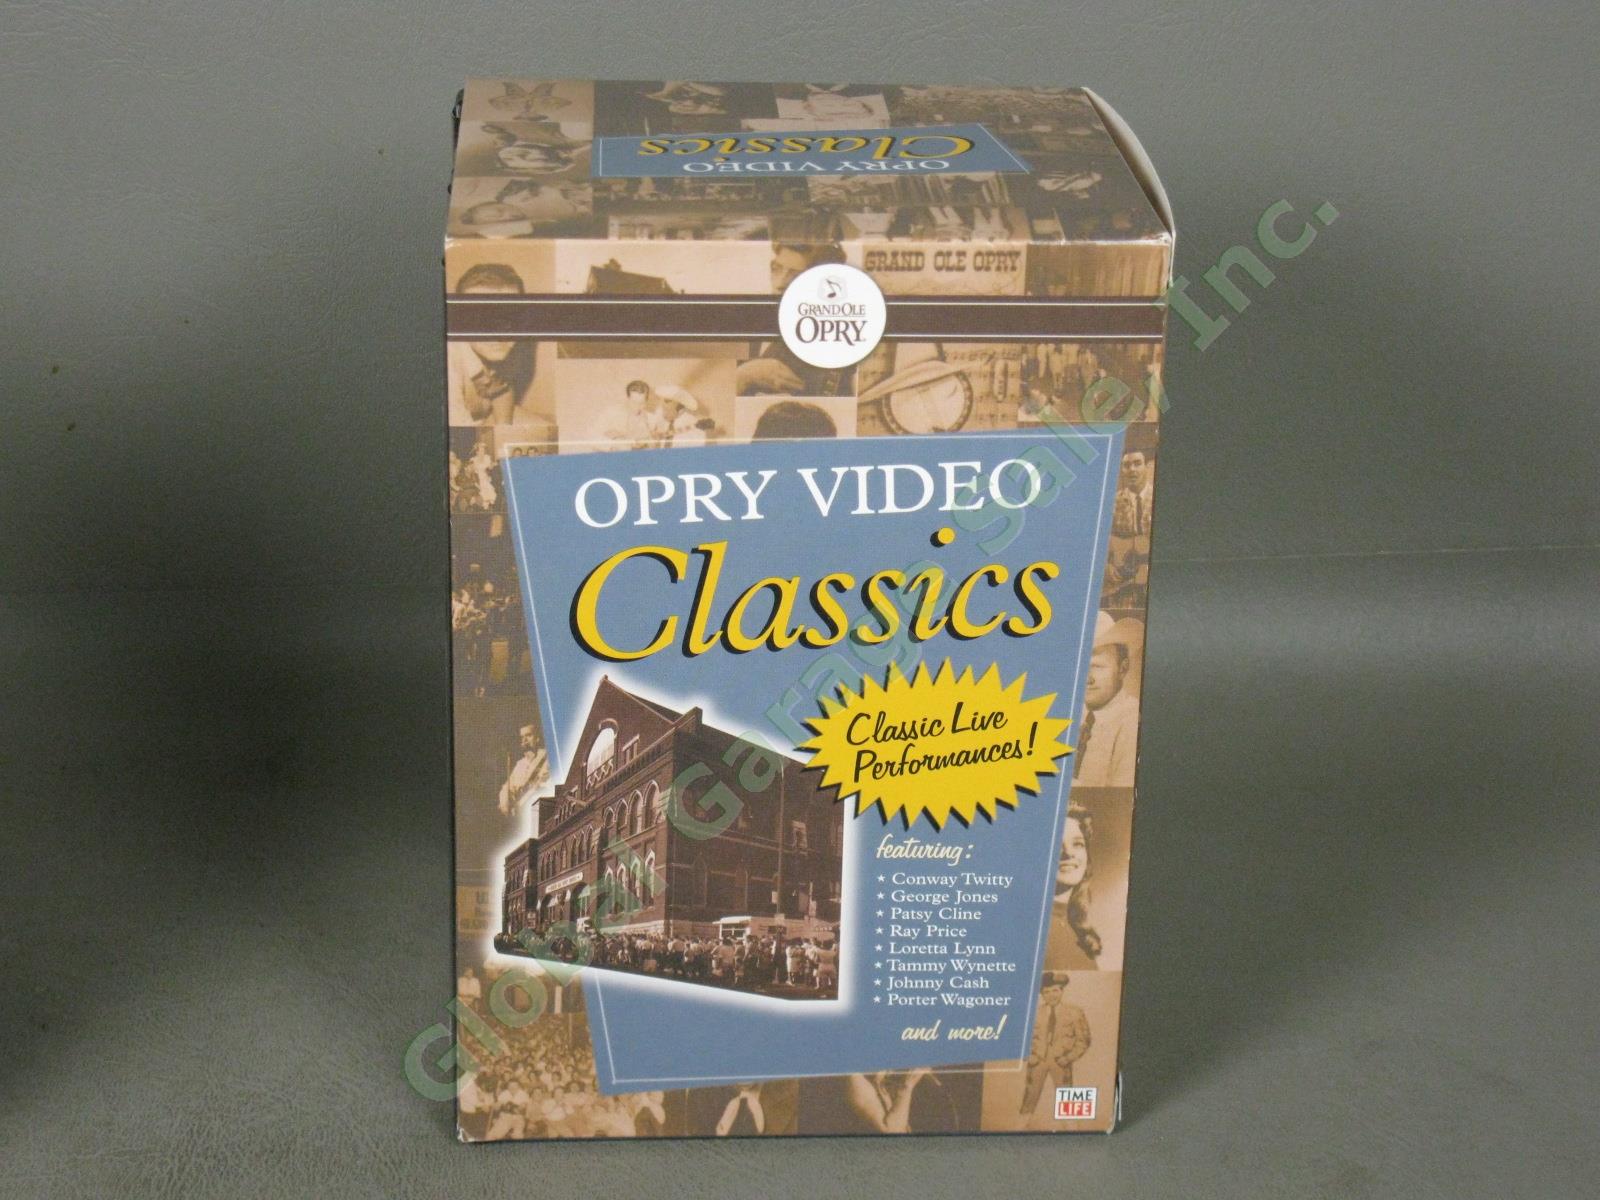 2 Grand Ole Opry Video Classics Time Life DVD Box Sets Live Performances 16 Disc 1